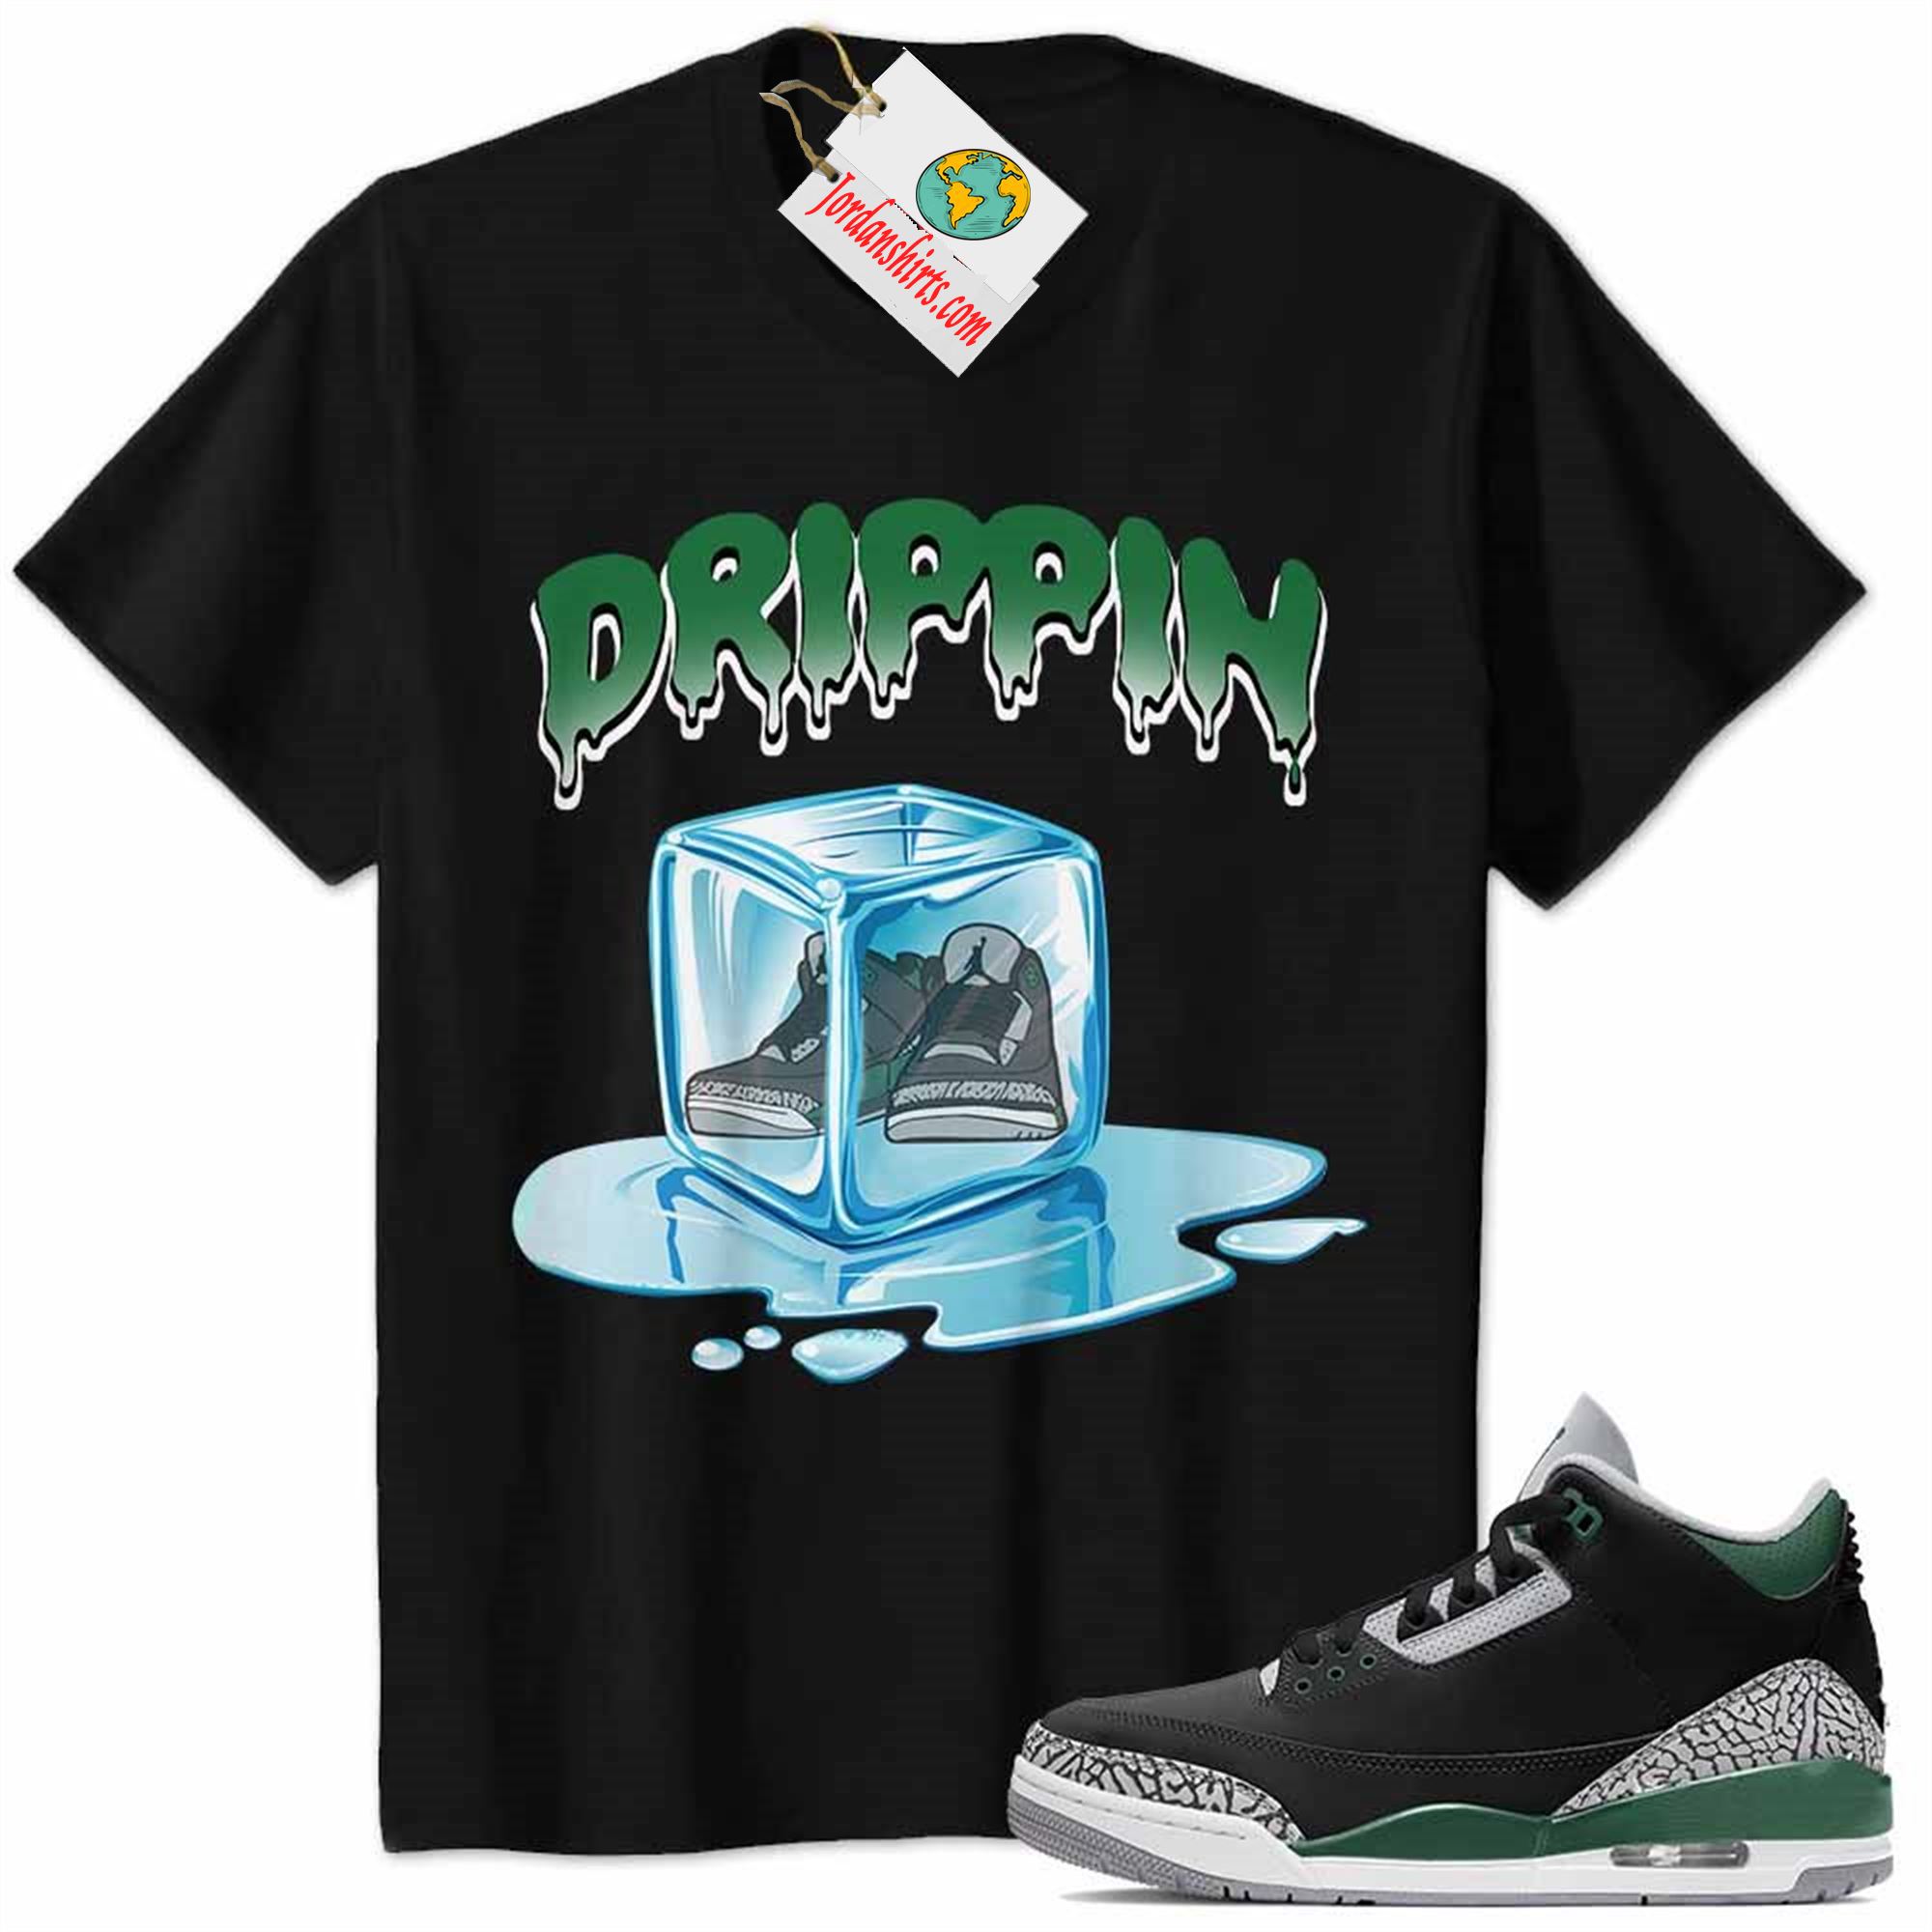 Jordan 3 Shirt, Jordan 3 Pine Green Shirt Ice Cube Melting Black Plus Size Up To 5xl